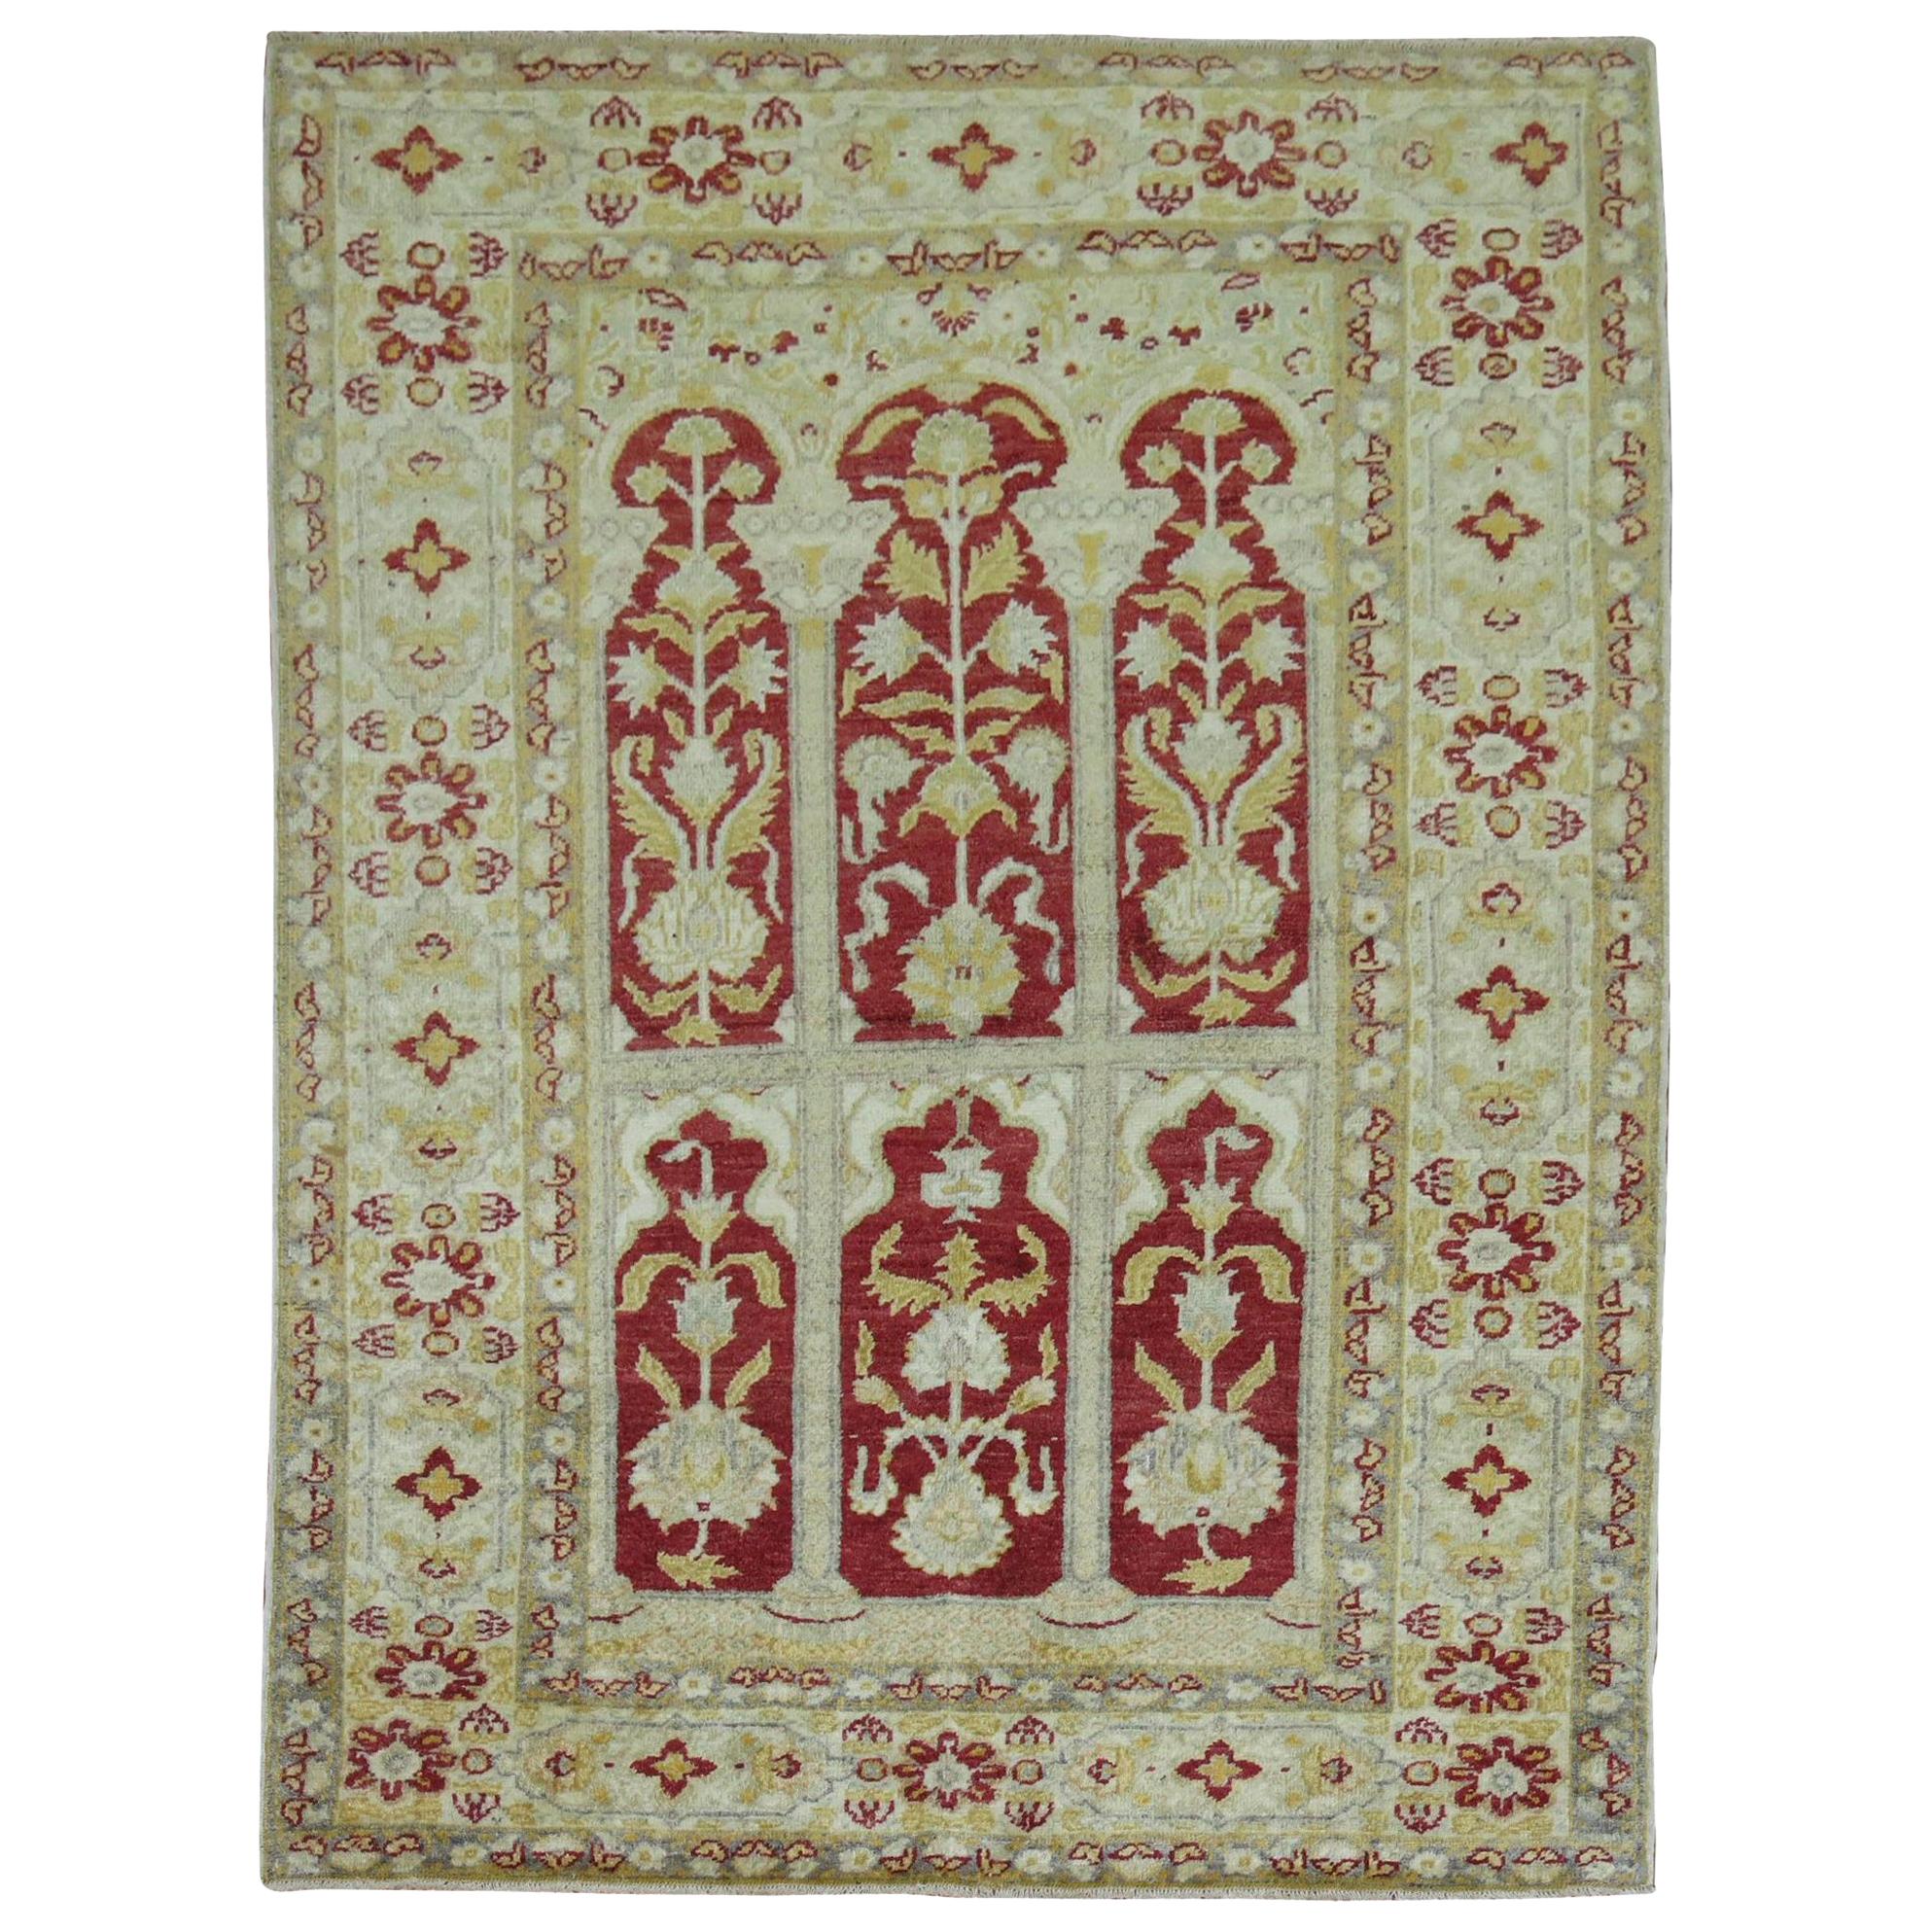 Cherry Red Antique Turkish Sivas Prayer Carpet, Early 20th Century